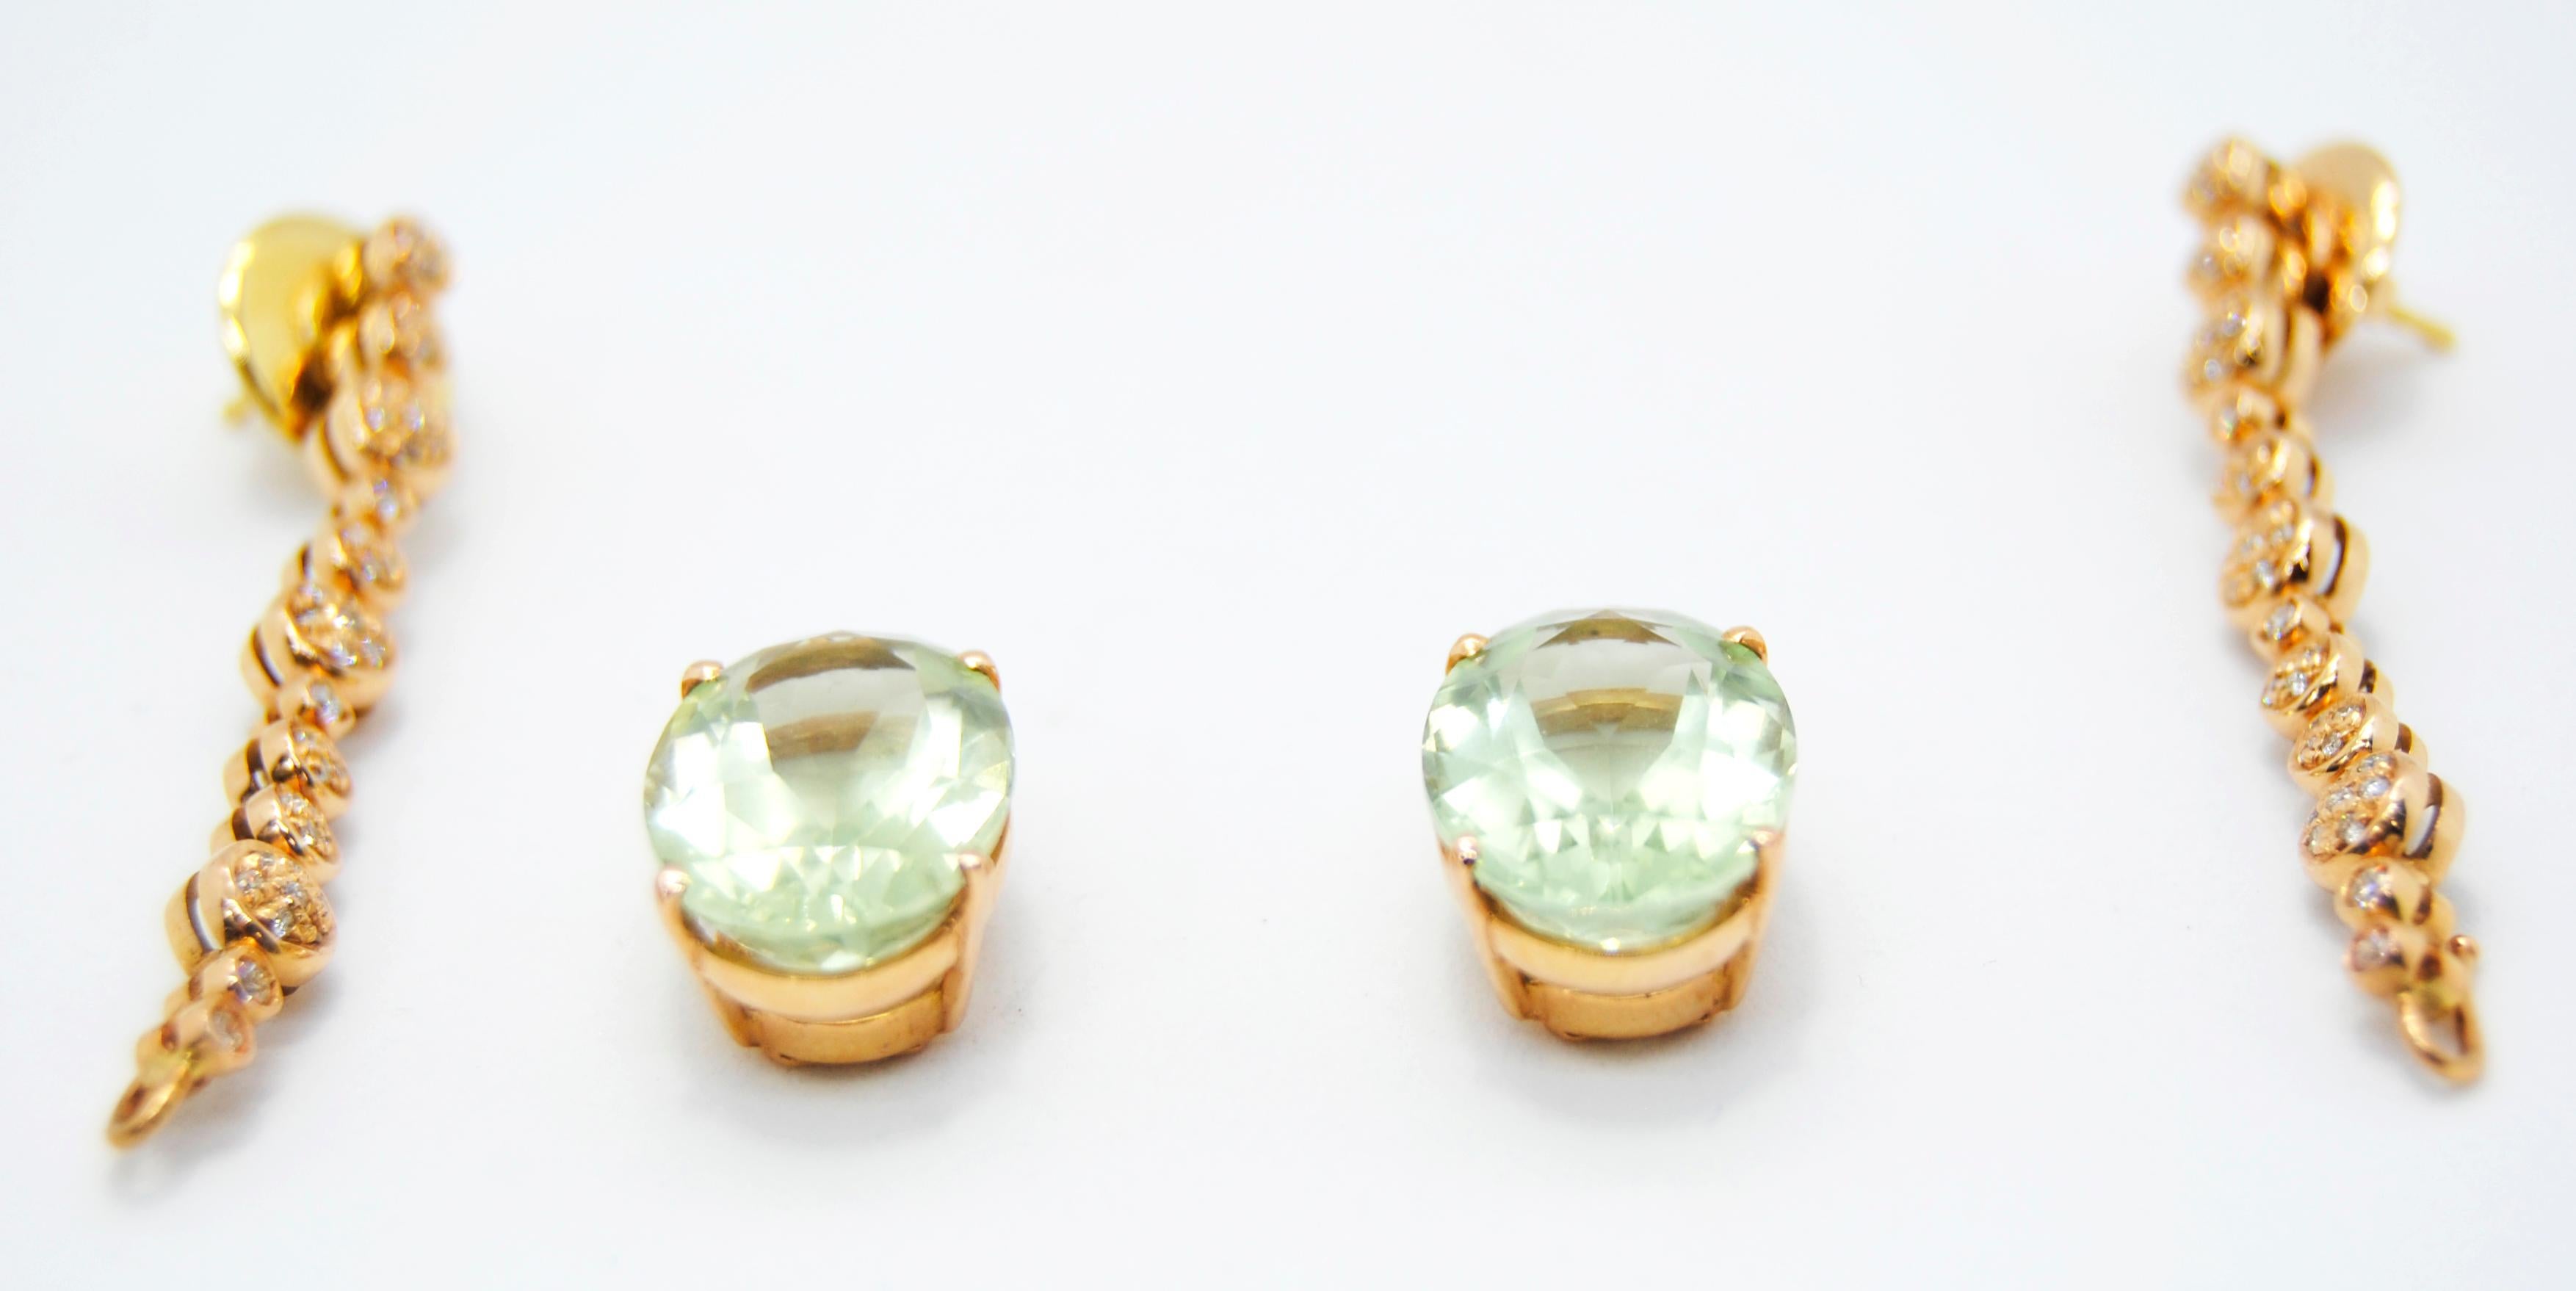 Brilliant Cut Antonini 18 Karat Pink Gold and Bright Green Amethyst Diamonds Earrings
